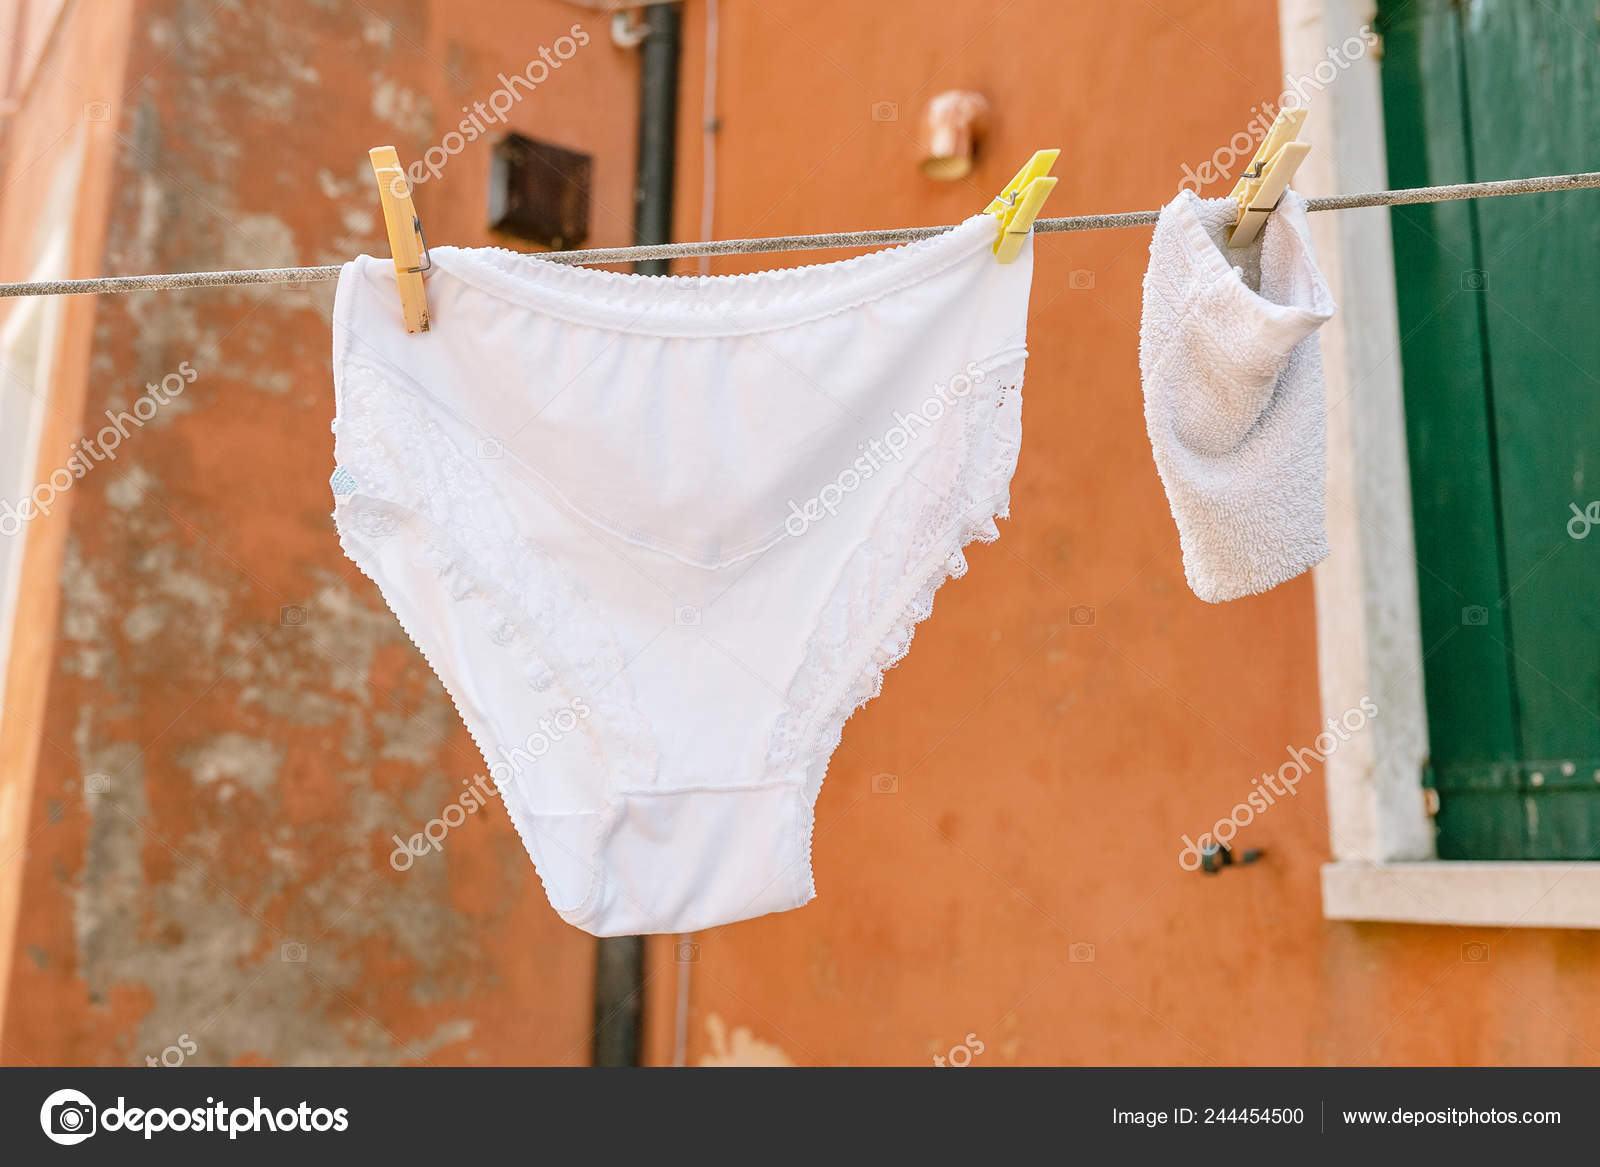 https://st4.depositphotos.com/1005632/24445/i/1600/depositphotos_244454500-stock-photo-funny-big-panty-clothesline-drying.jpg